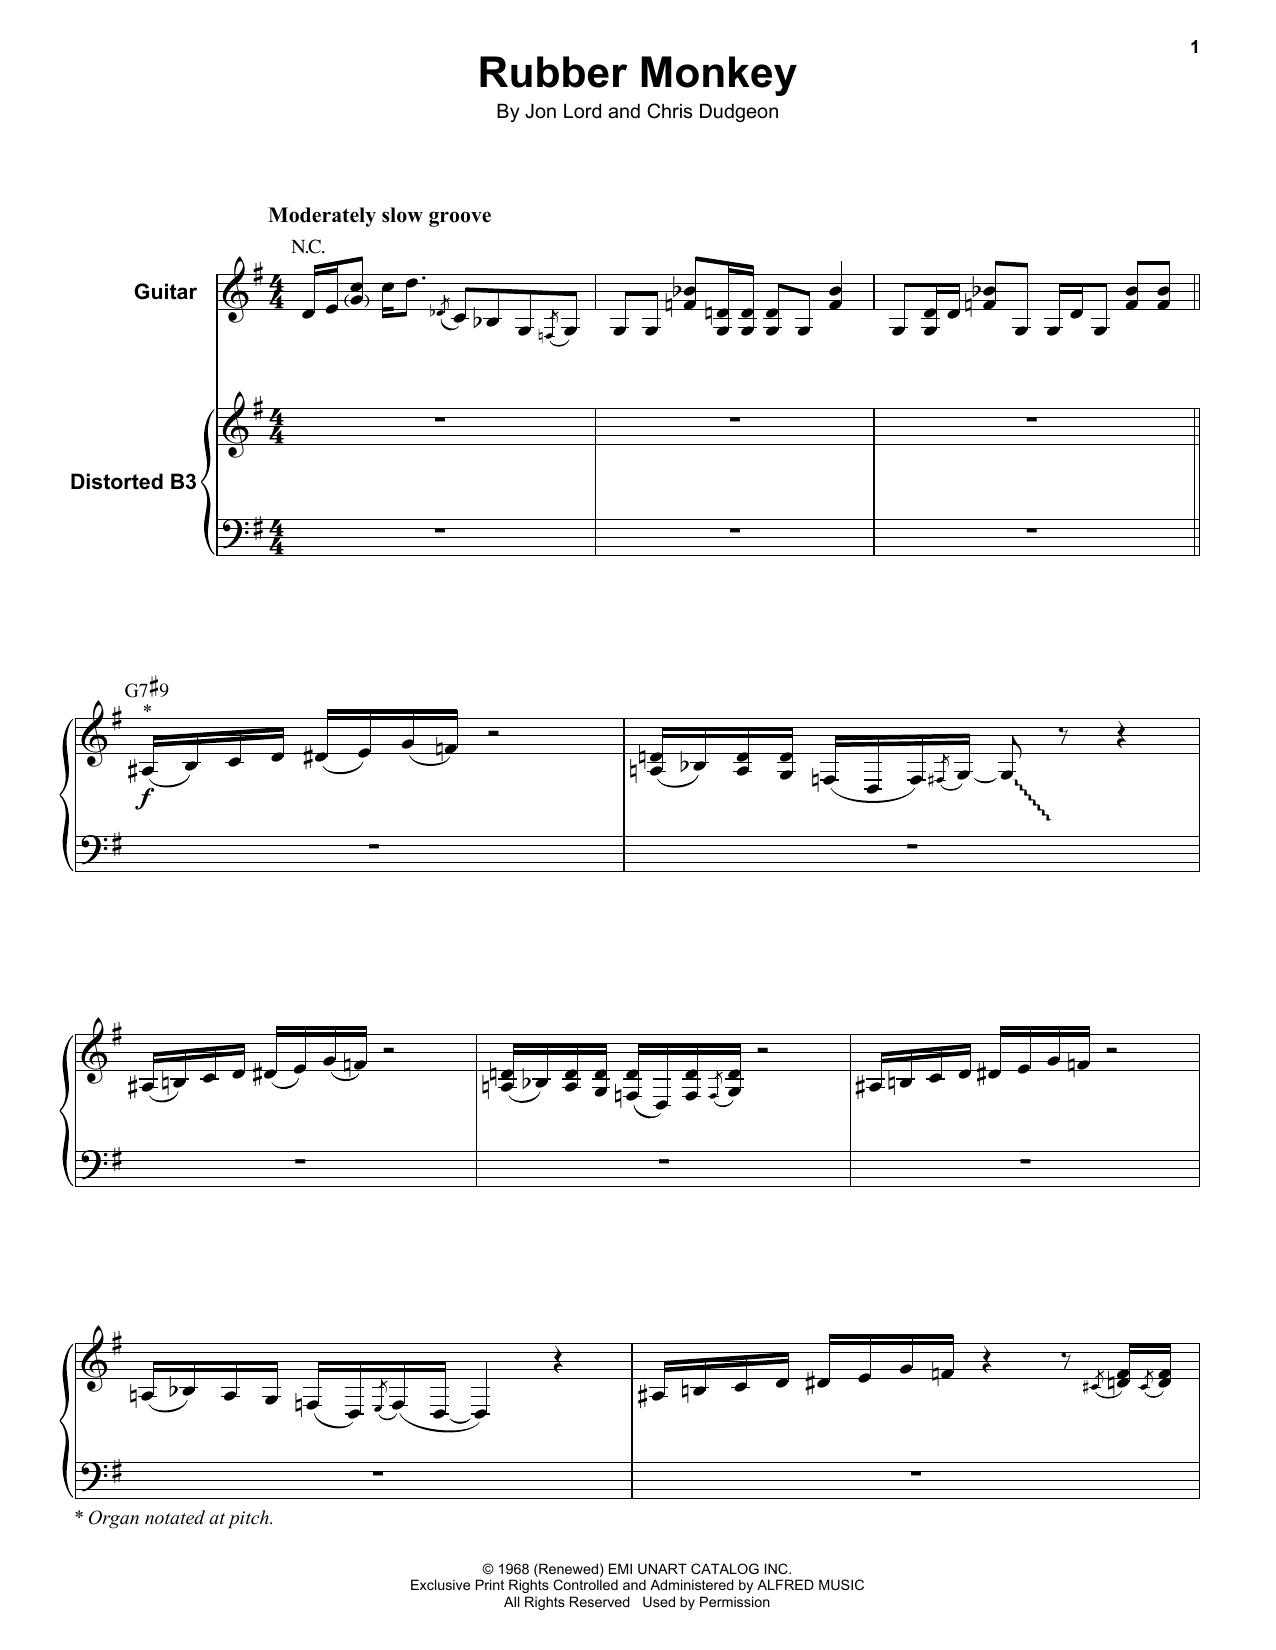 Santa Barbara Machine Head Rubber Monkey Sheet Music Notes & Chords for Keyboard Transcription - Download or Print PDF